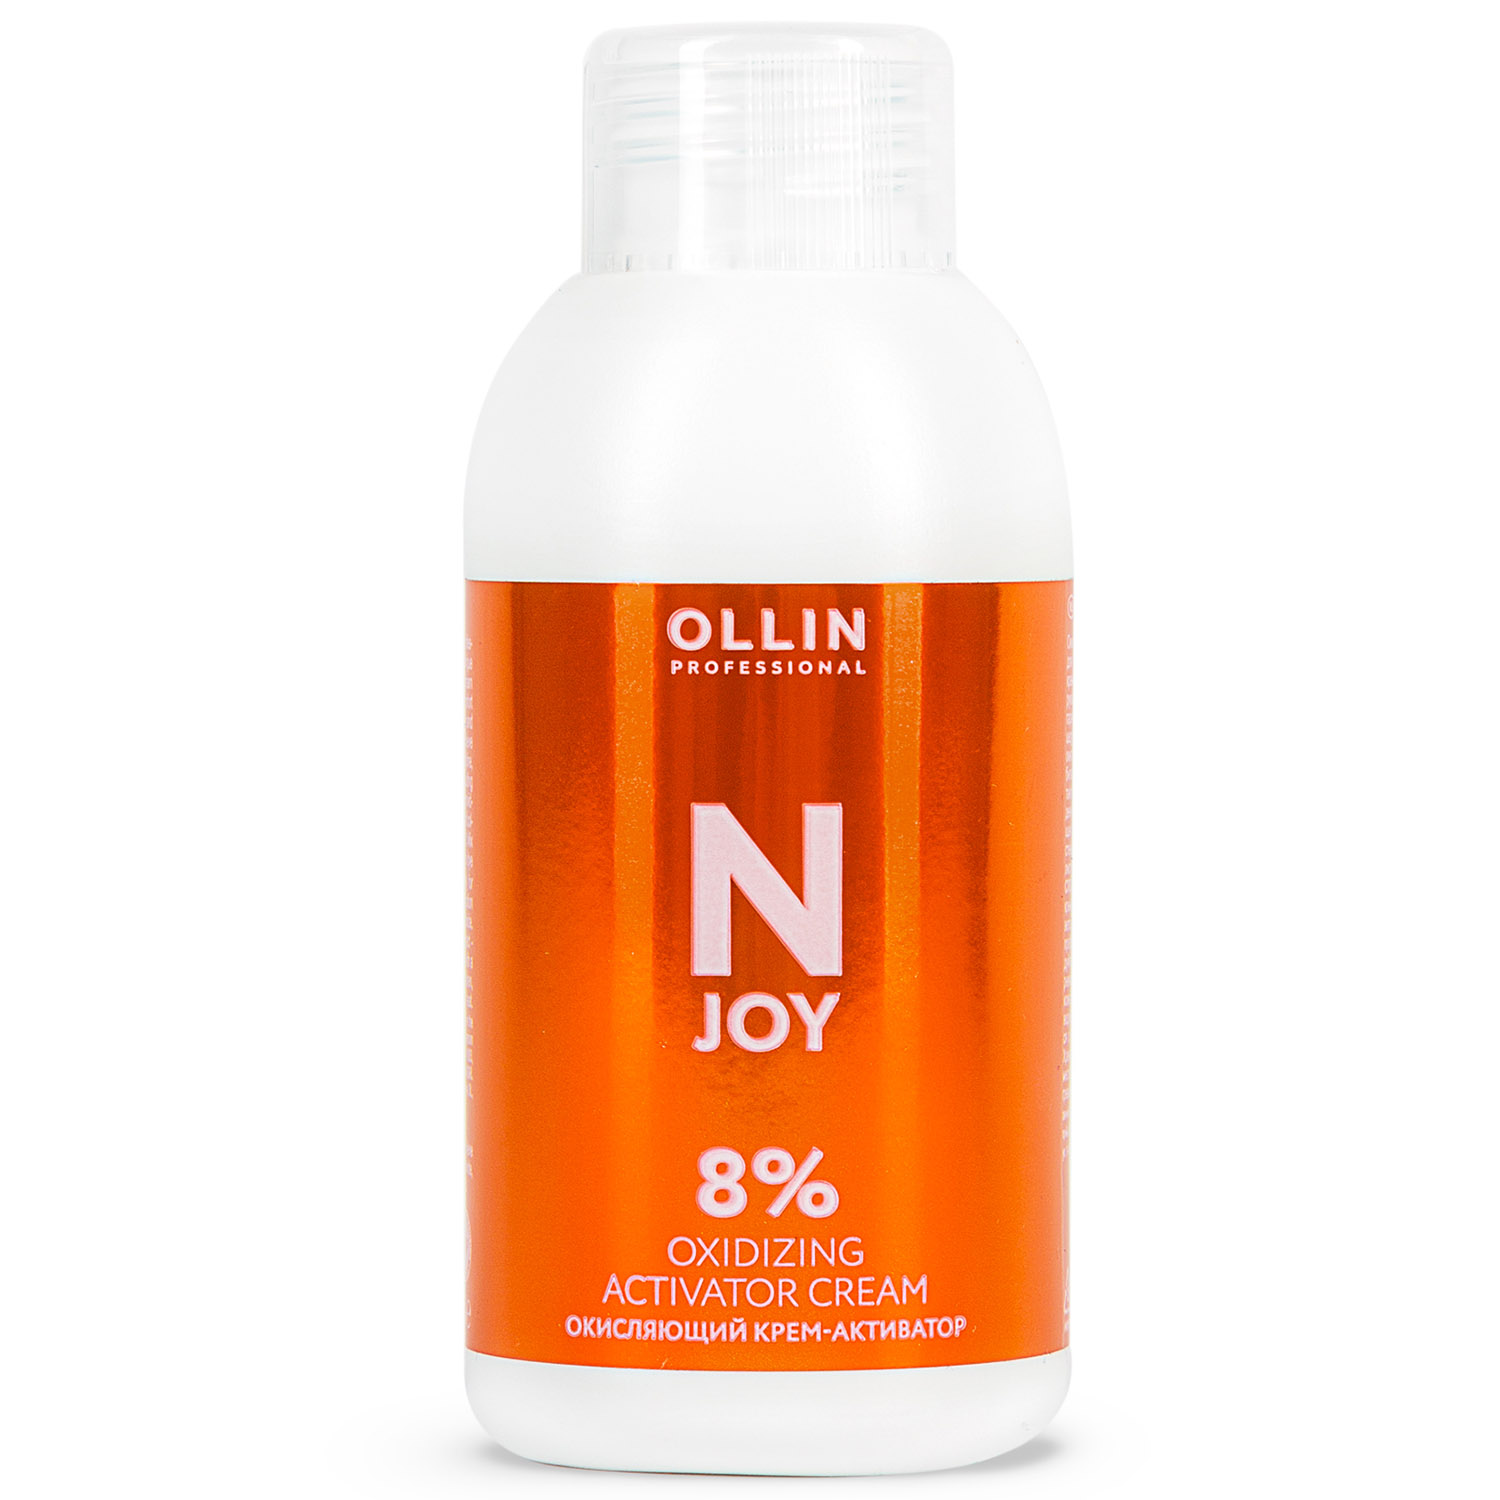 Ollin Professional Окисляющий крем-активатор 8%, 100 мл (Ollin Professional, N-Joy) окисляющий крем активатор 0 04 ollin n joy 100 мл